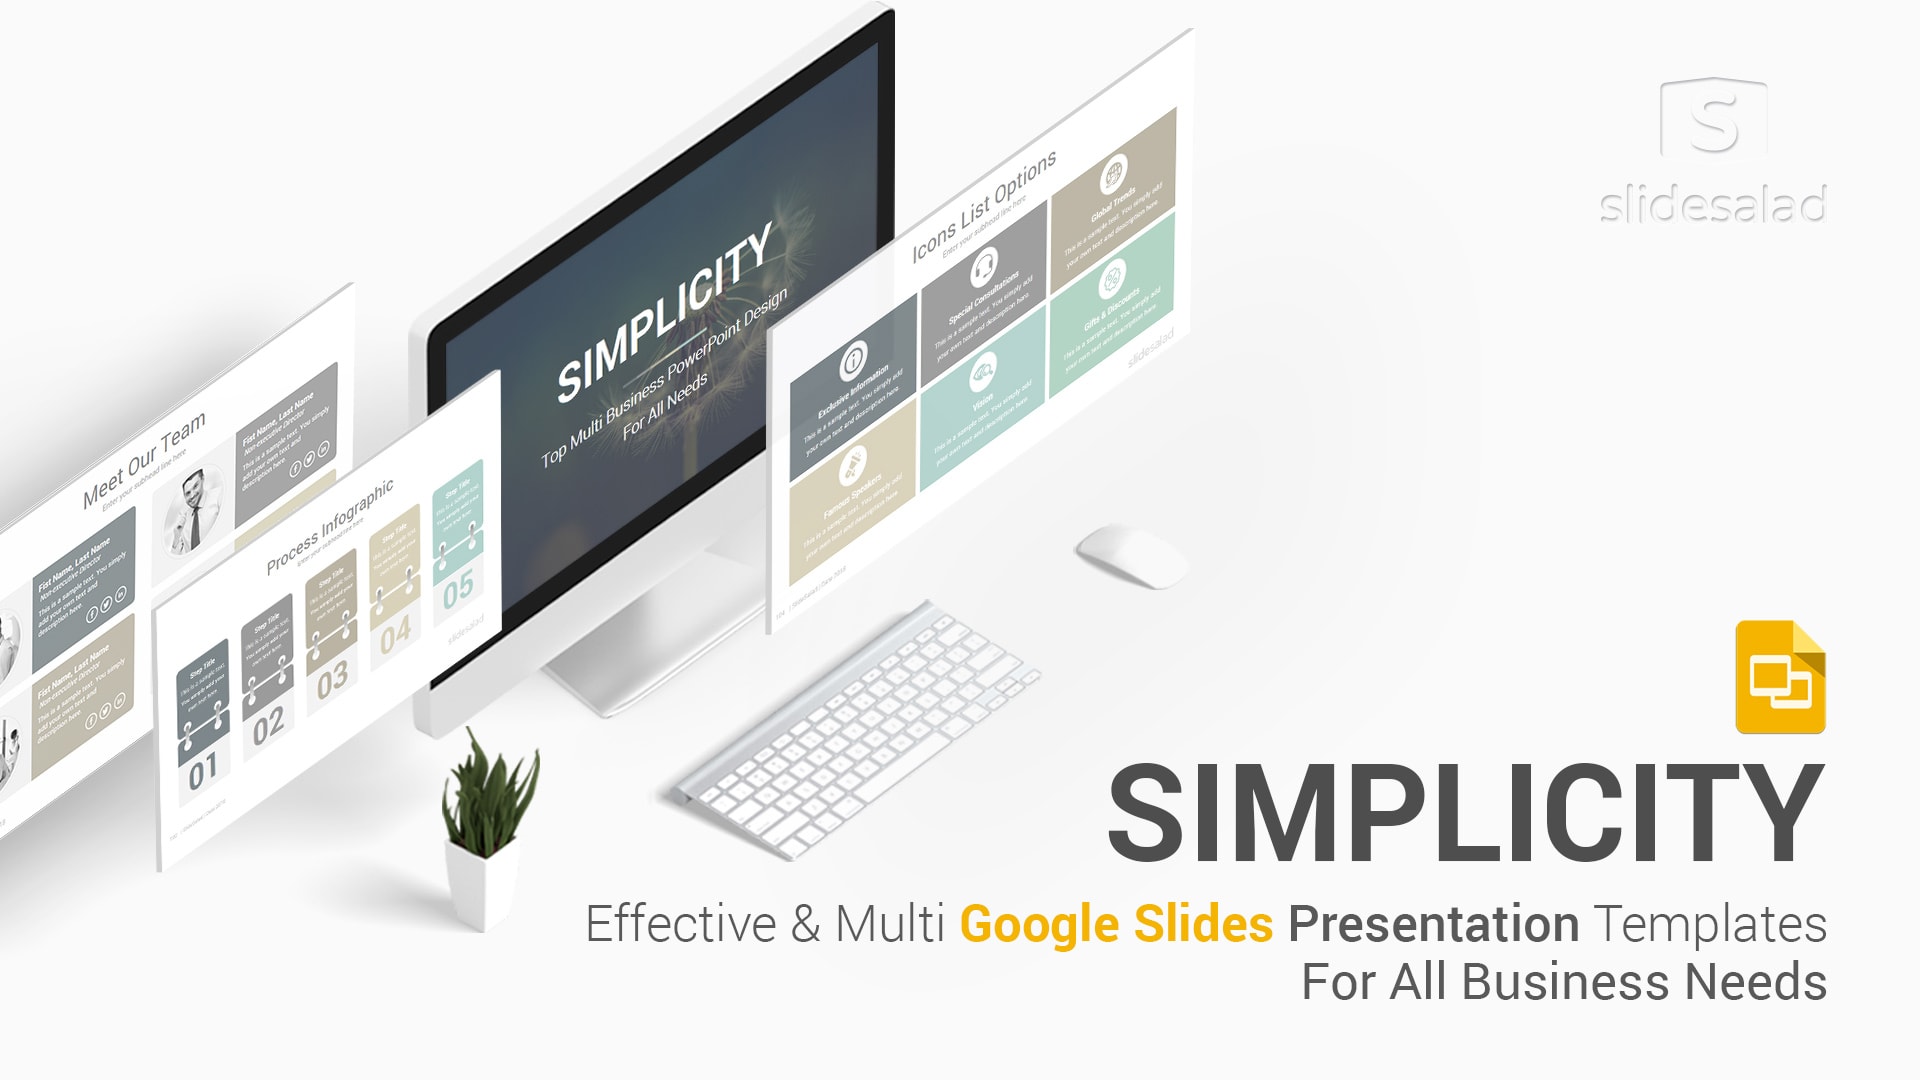 Simplicity Professional Business Google Slides Templates - Best Google Slides Templates Design for Business Presentations